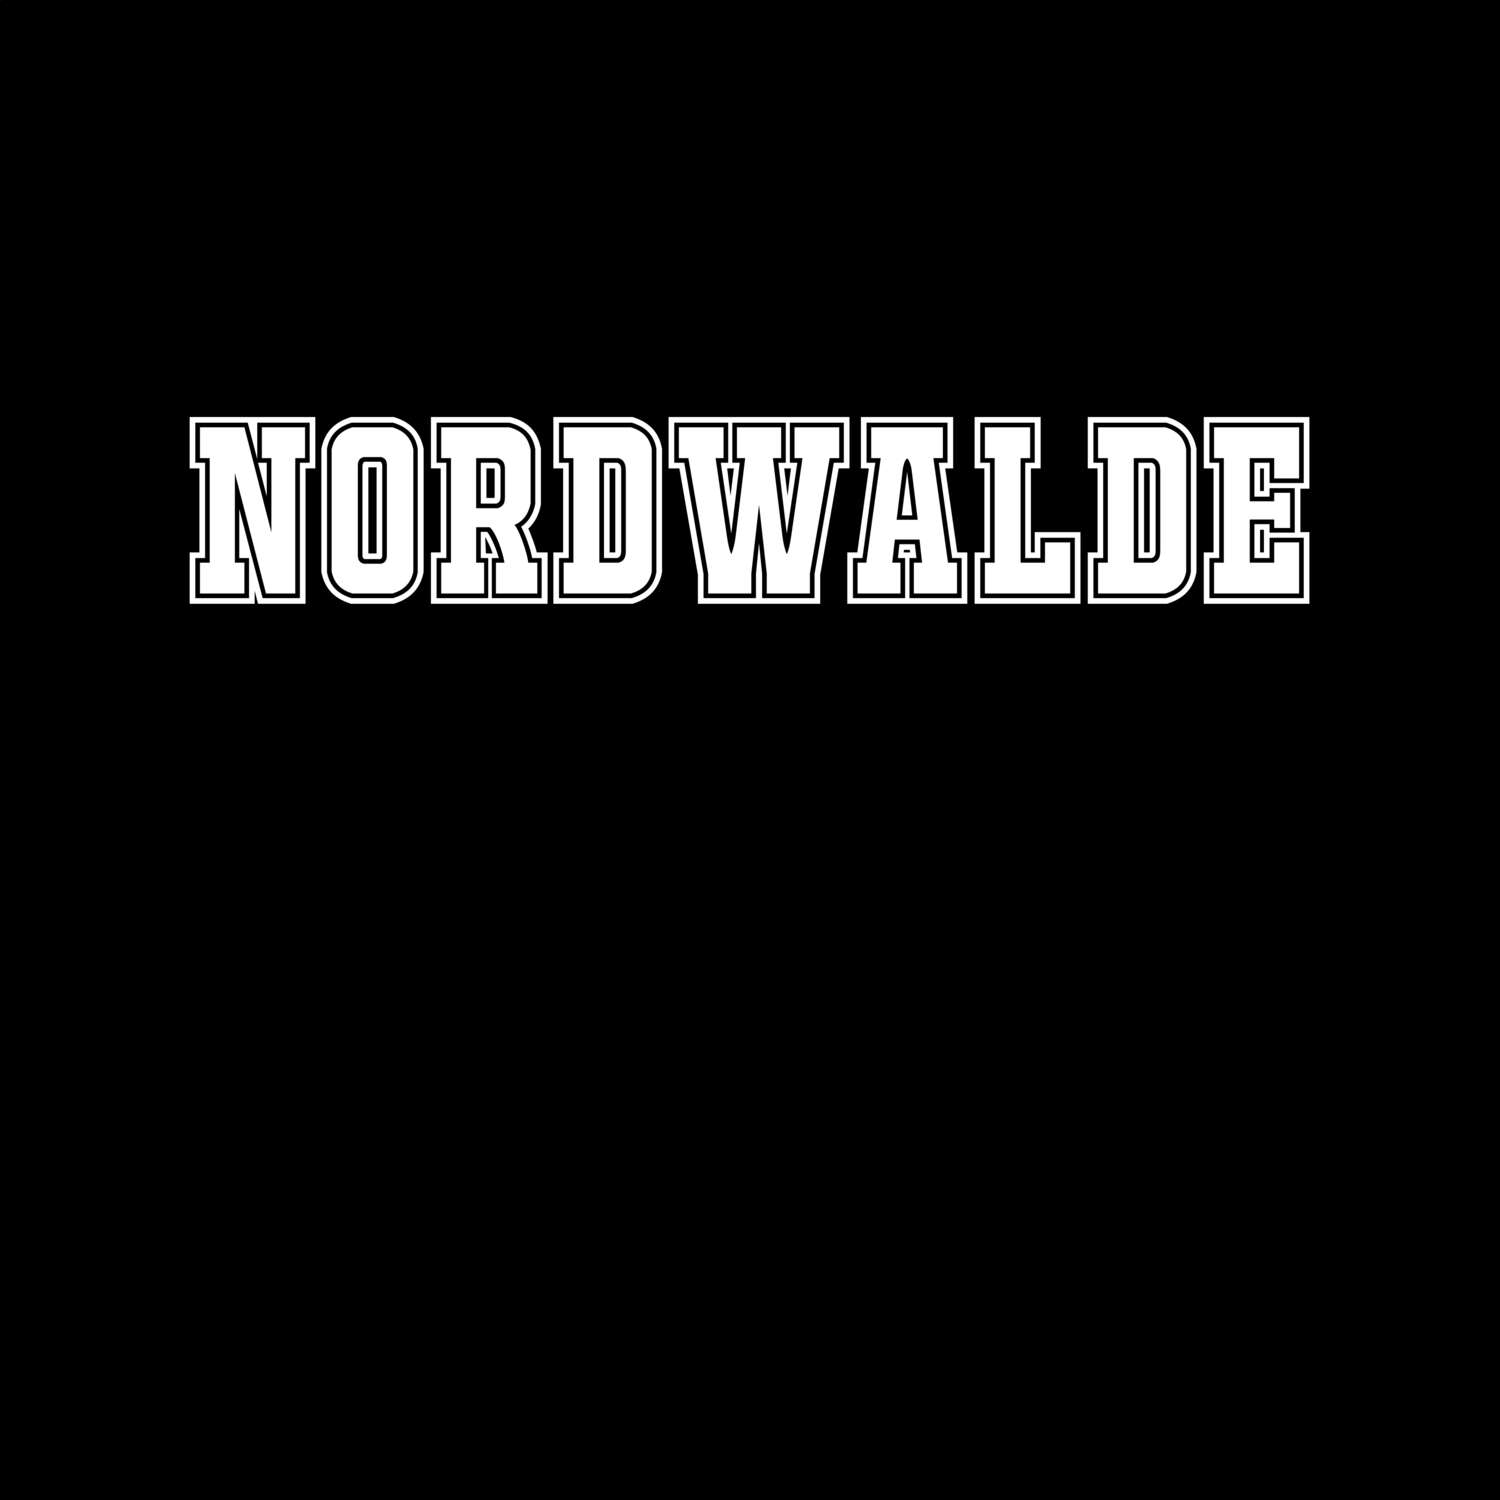 Nordwalde T-Shirt »Classic«